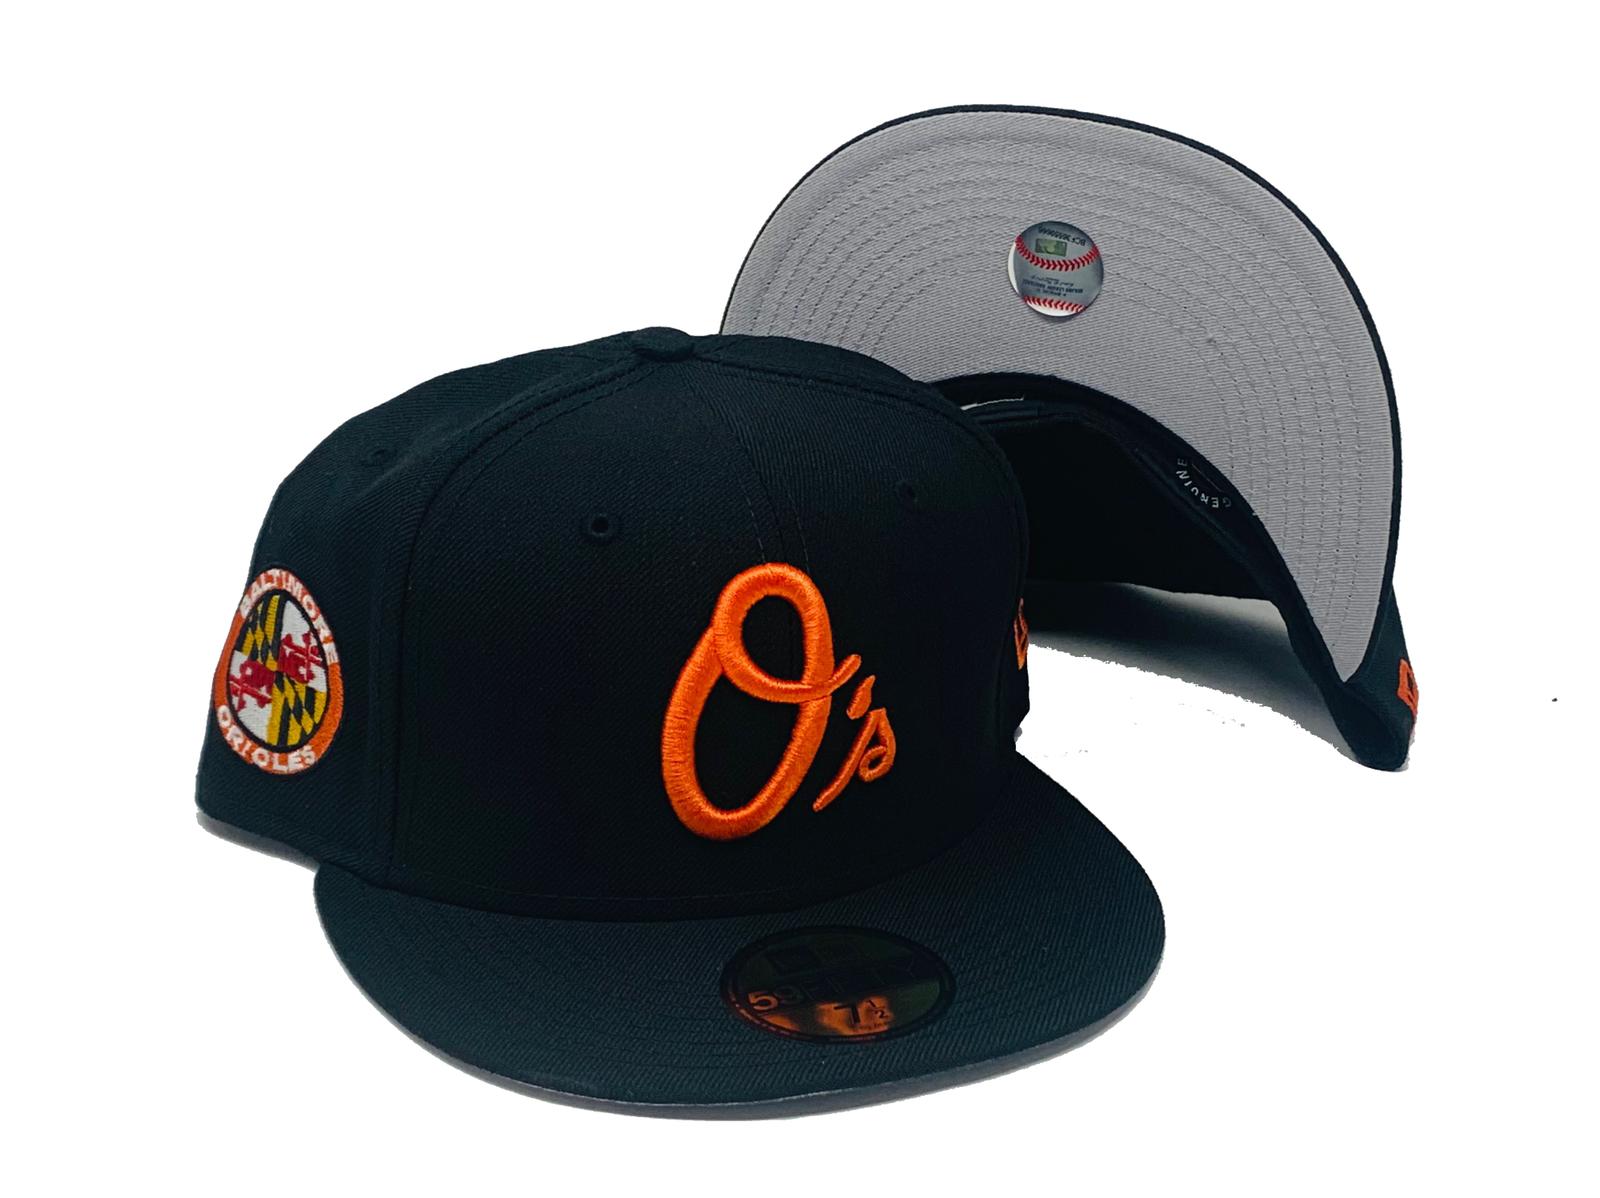  Adult FLAT BRIM Baltimore Orioles Home Wht/Blk/Orng Hat Cap MLB  Adjustable : Sports Fan Baseball Caps : Sports & Outdoors